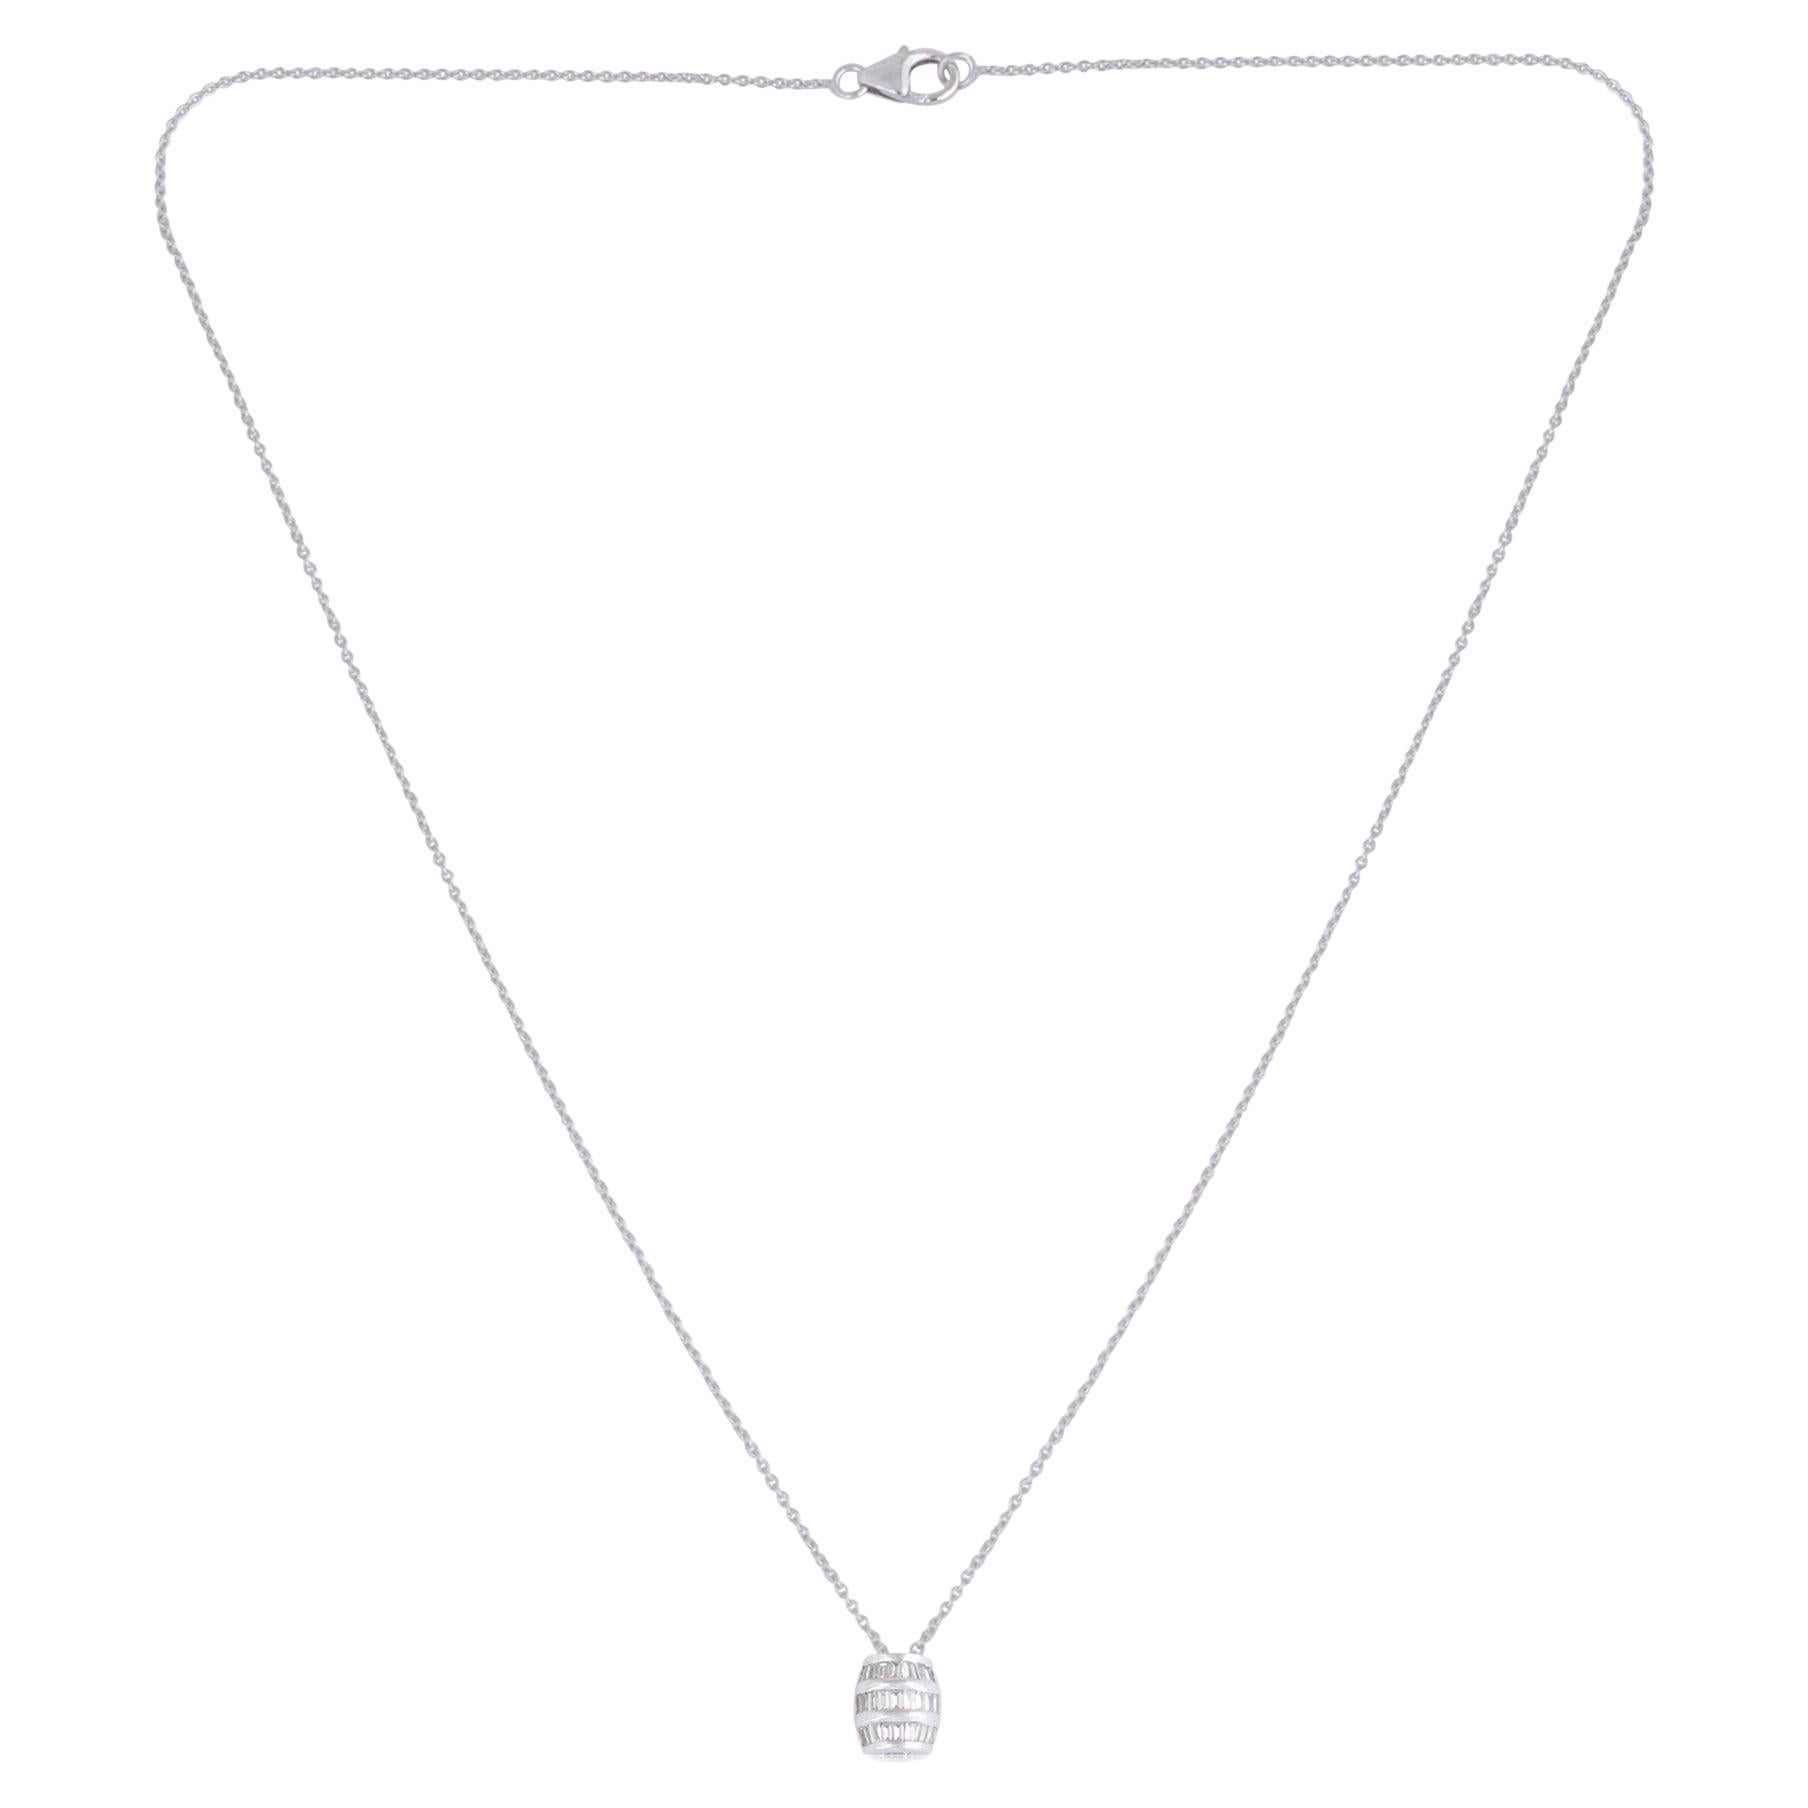 Baguette Diamond Charm Pendant Necklace 18 Karat White Gold Handmade Jewelry